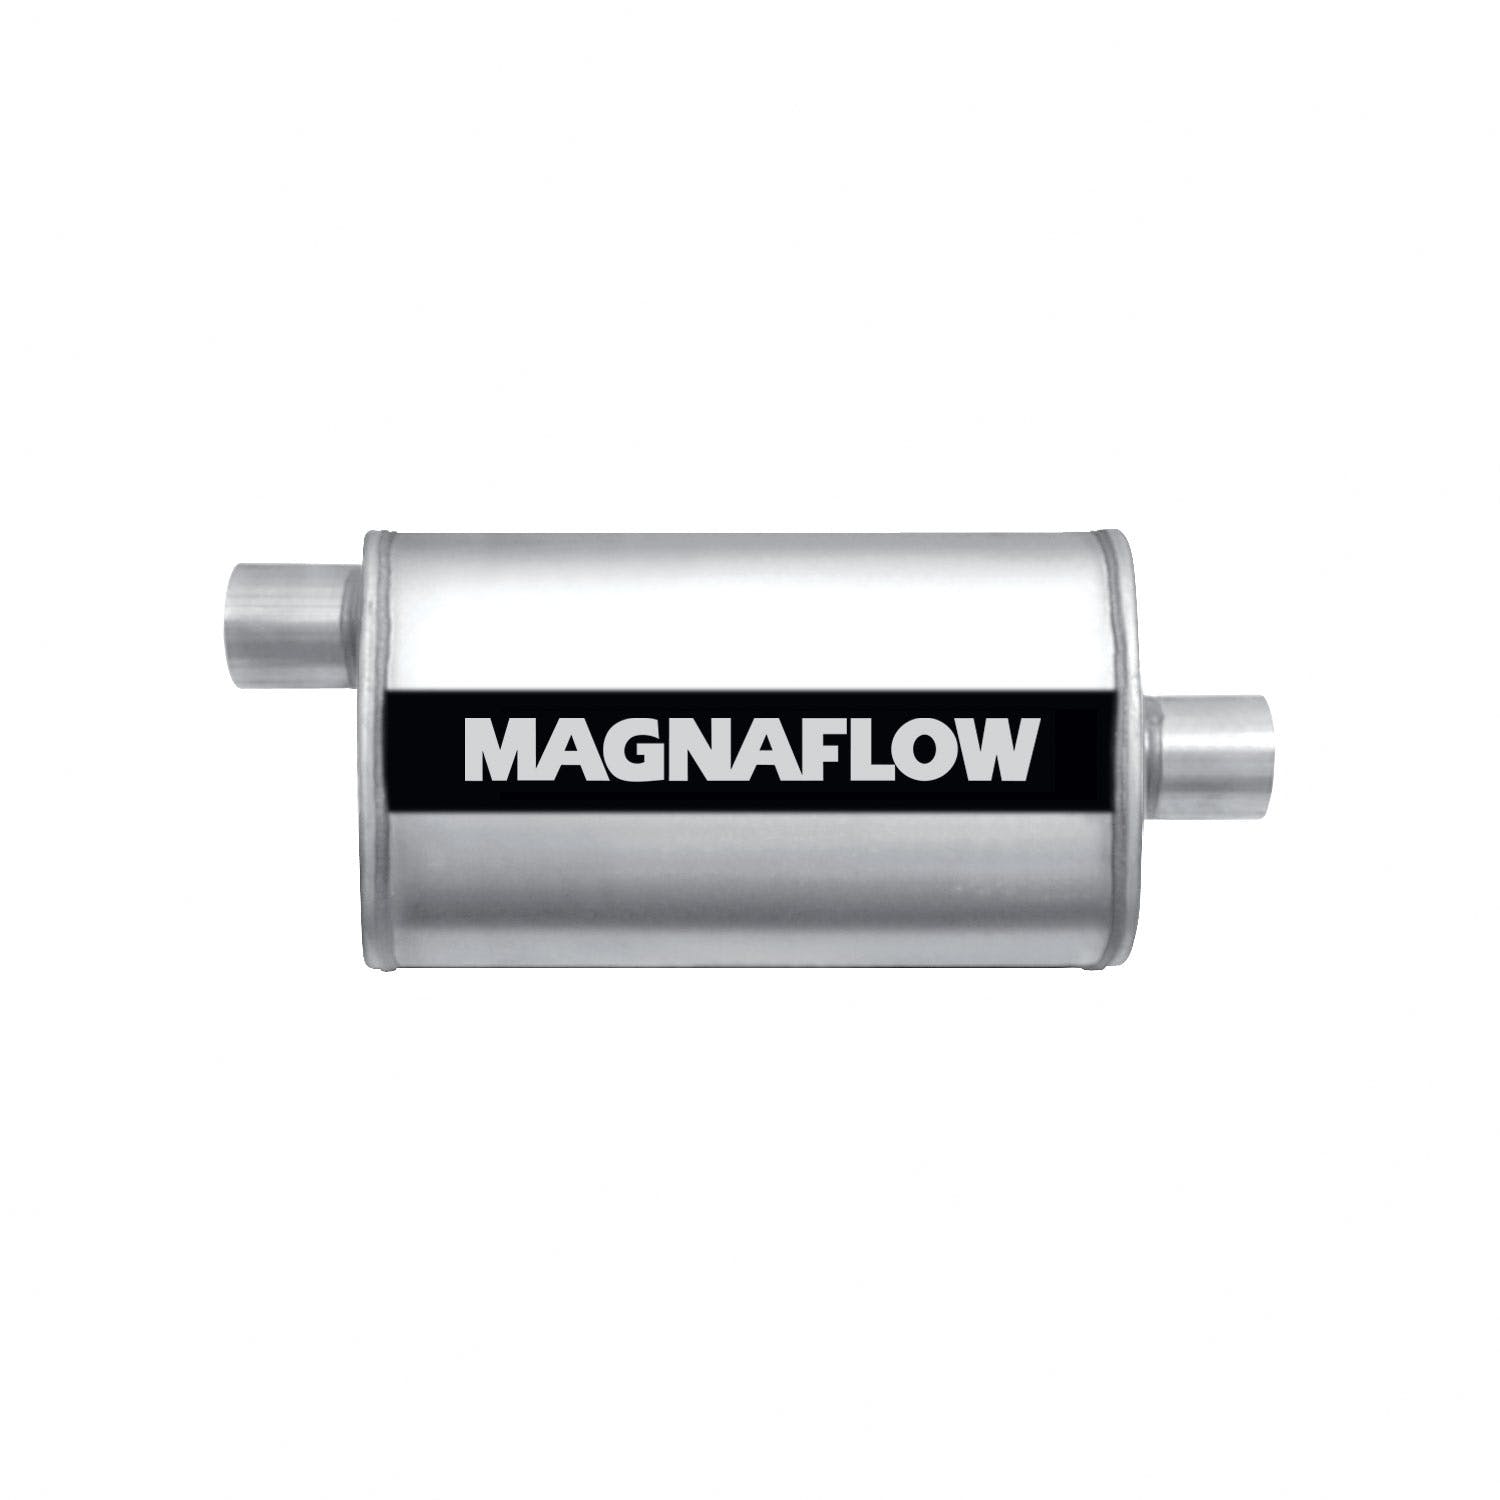 MagnaFlow Exhaust Products 11225 Universal Muffler